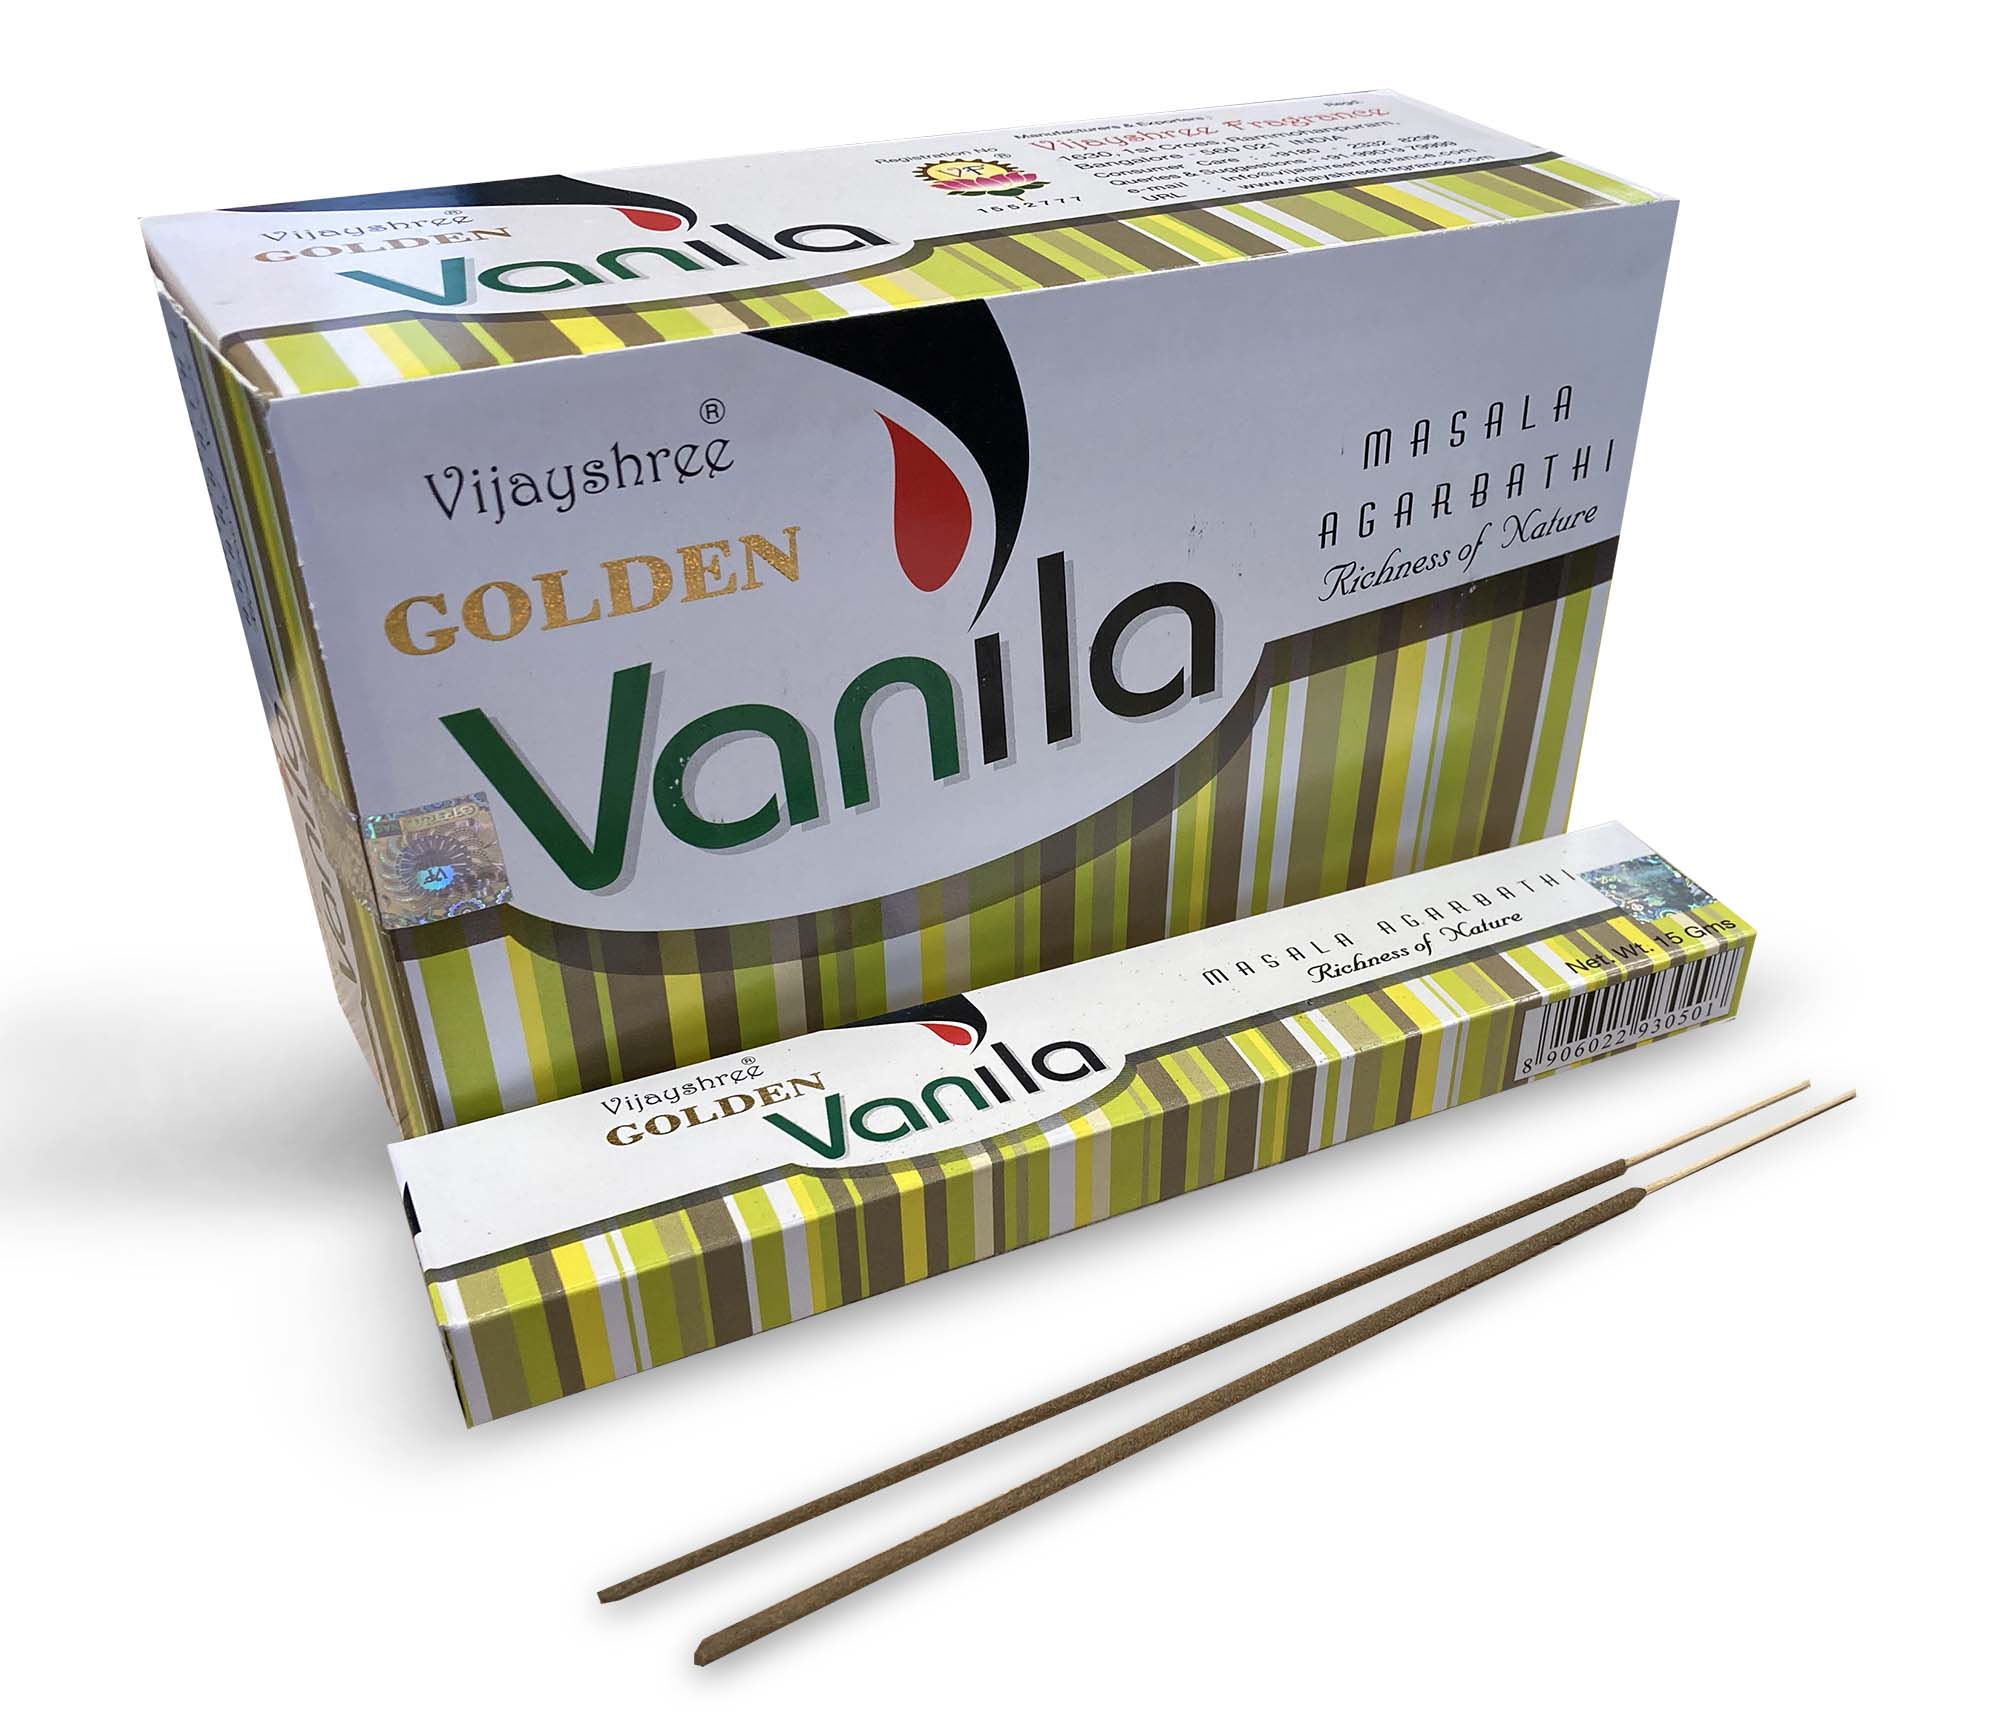 Golden vanila vijayshree incense 15g